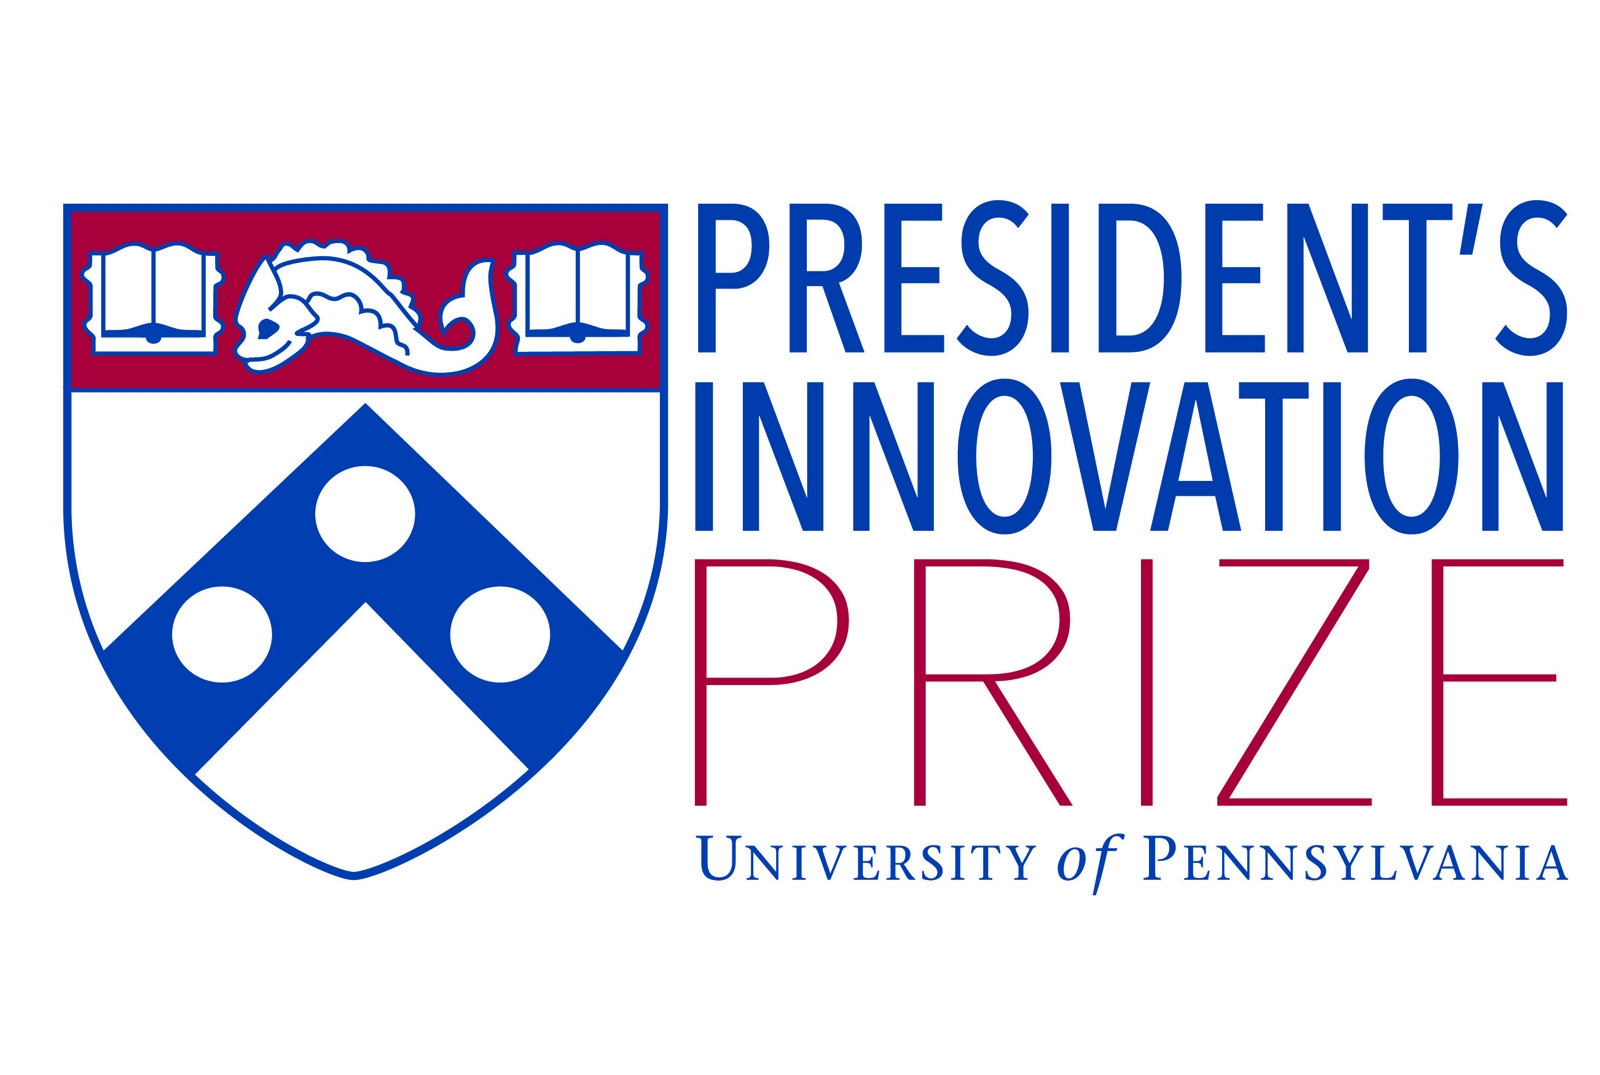 President's Innovation Prize logo